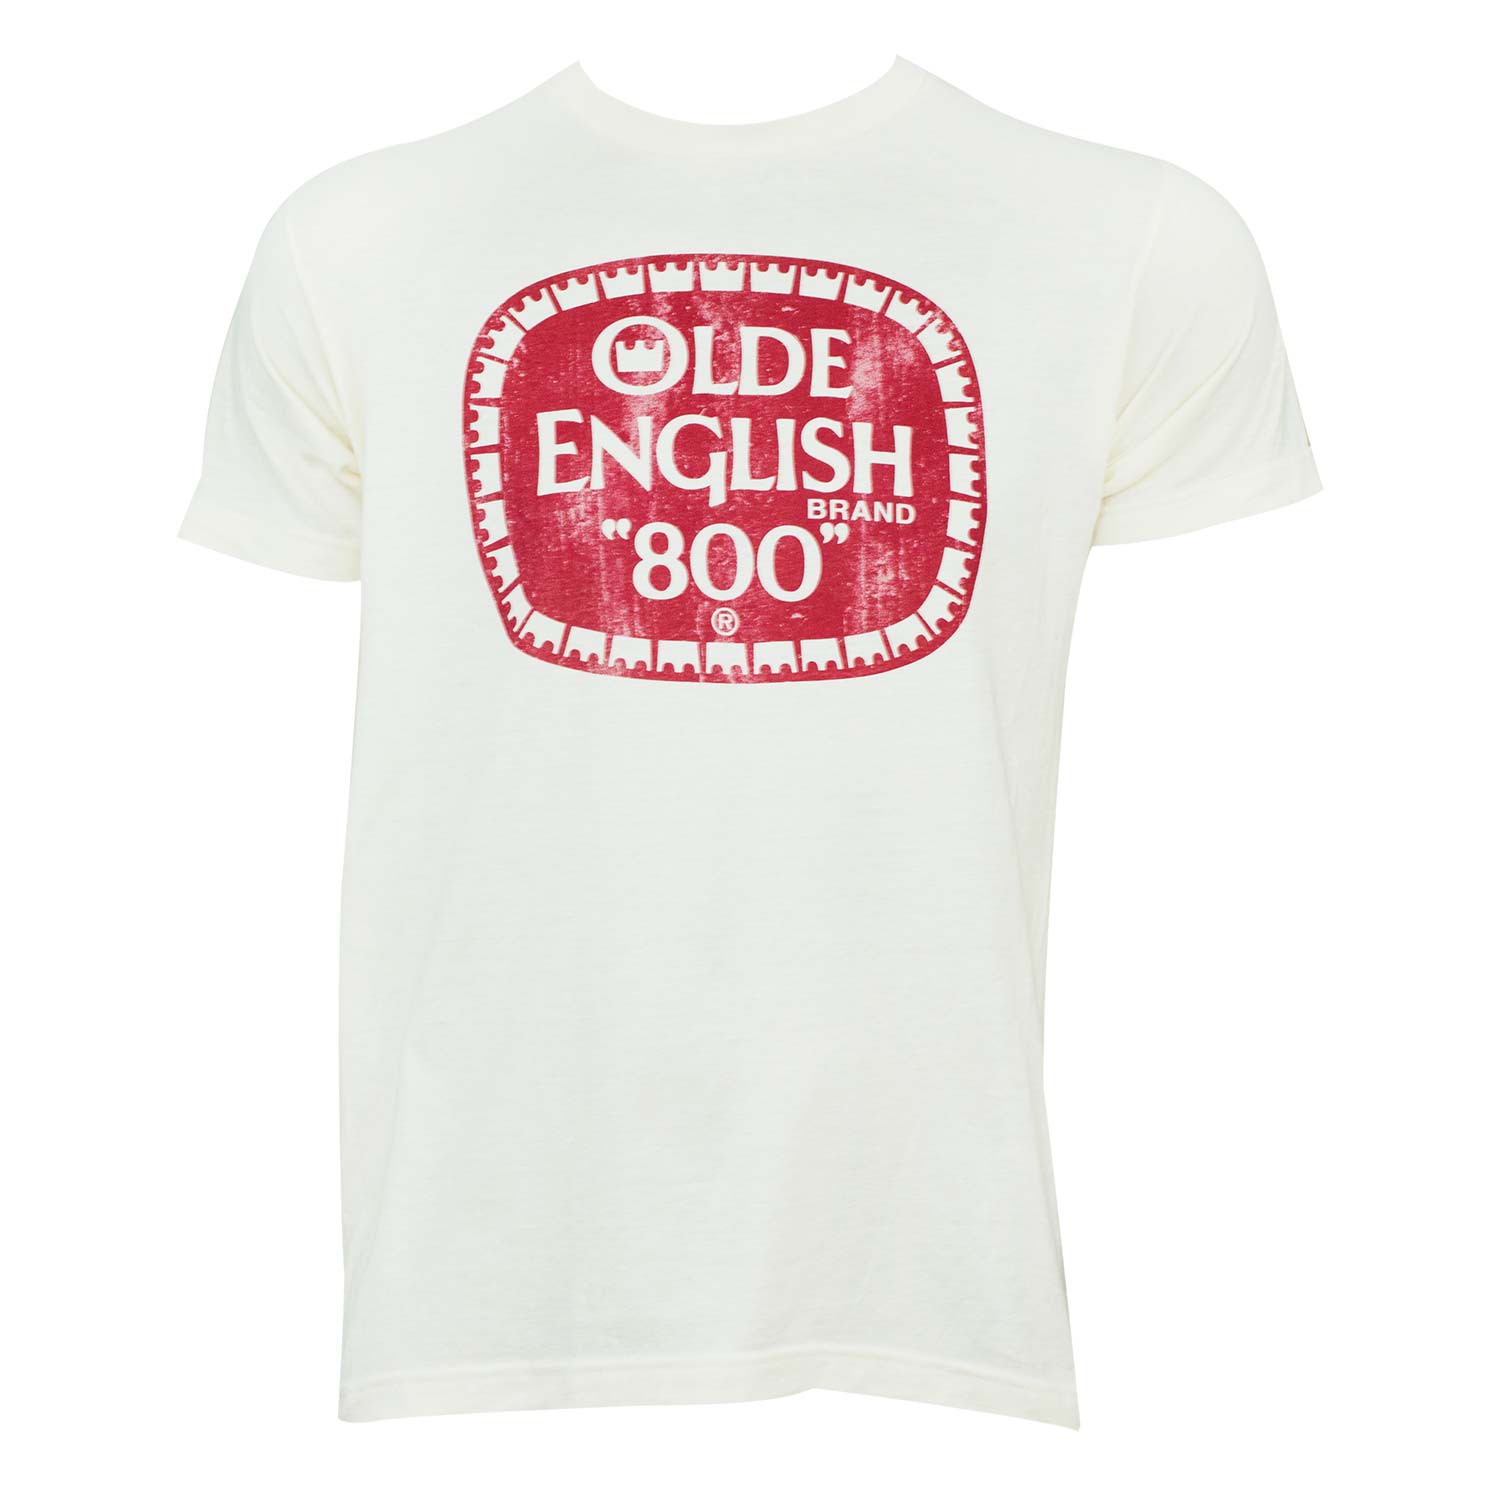 Olde English Off White Tee Shirt